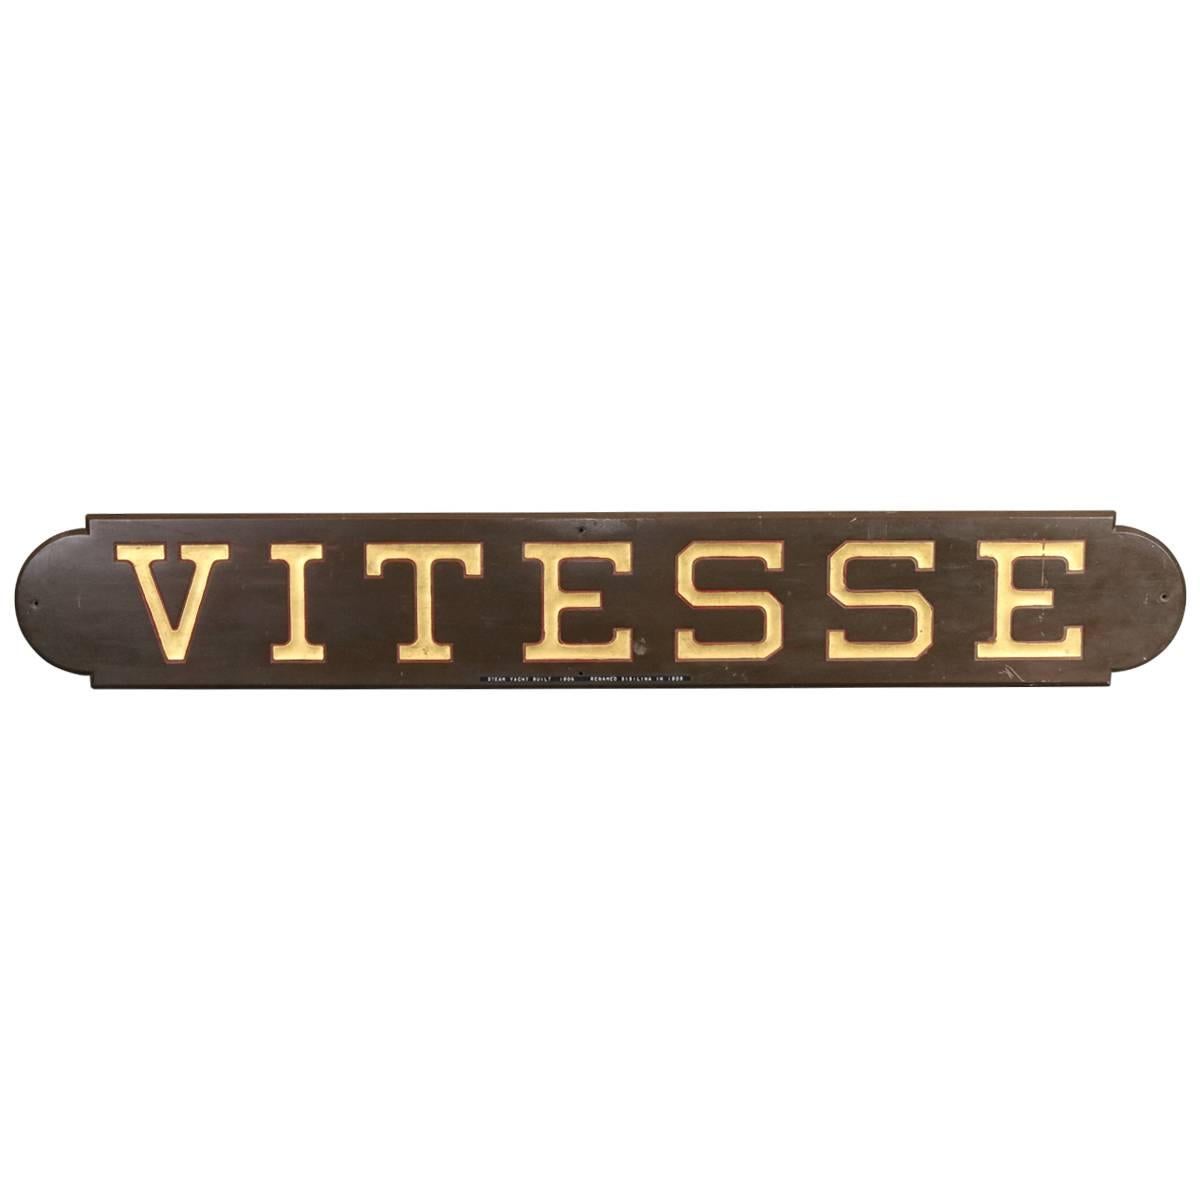 Commuter Yacht Vitesse Nameboard